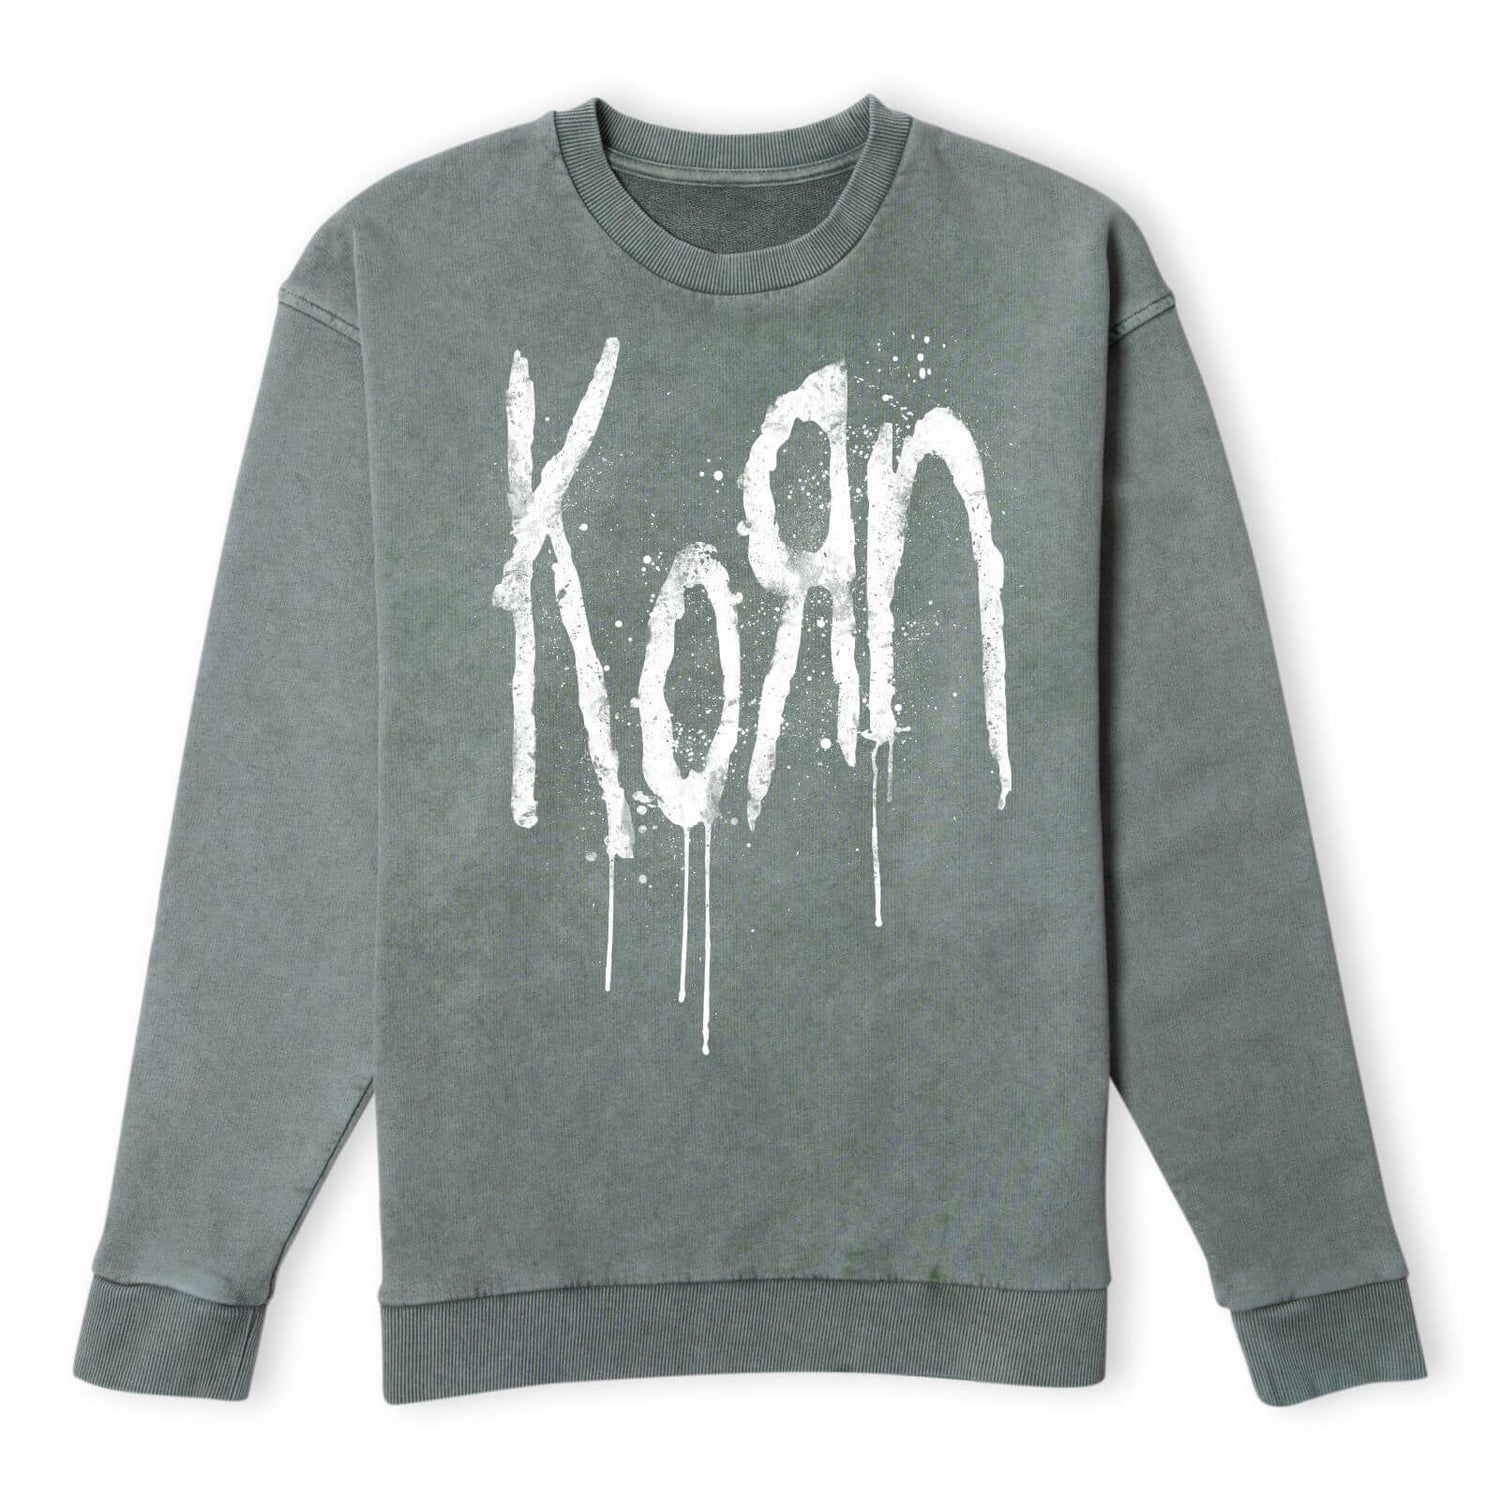 Korn Splatter Sweatshirt - Khaki Acid Wash